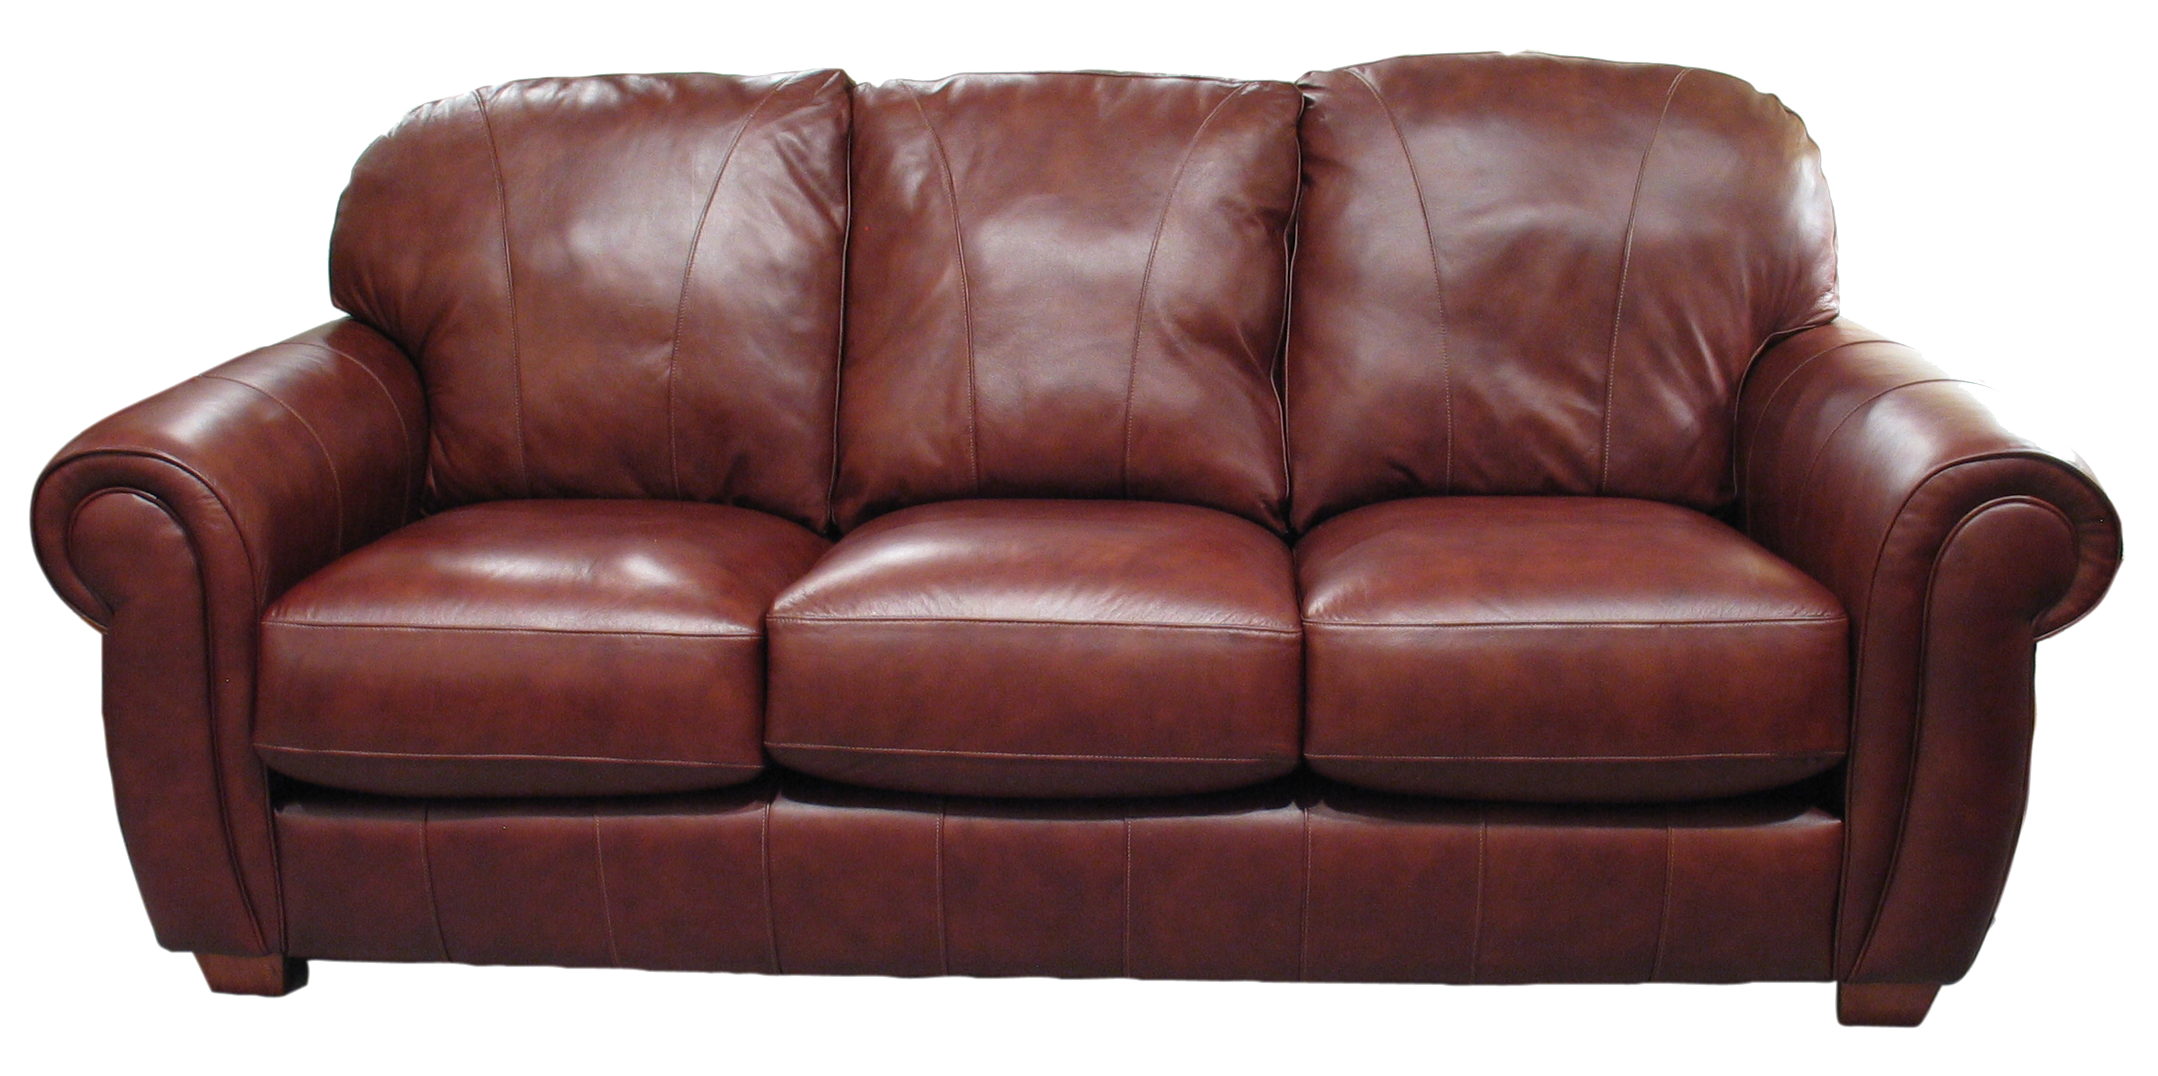 Brown Sofa Png Image - Sofa, Transparent background PNG HD thumbnail